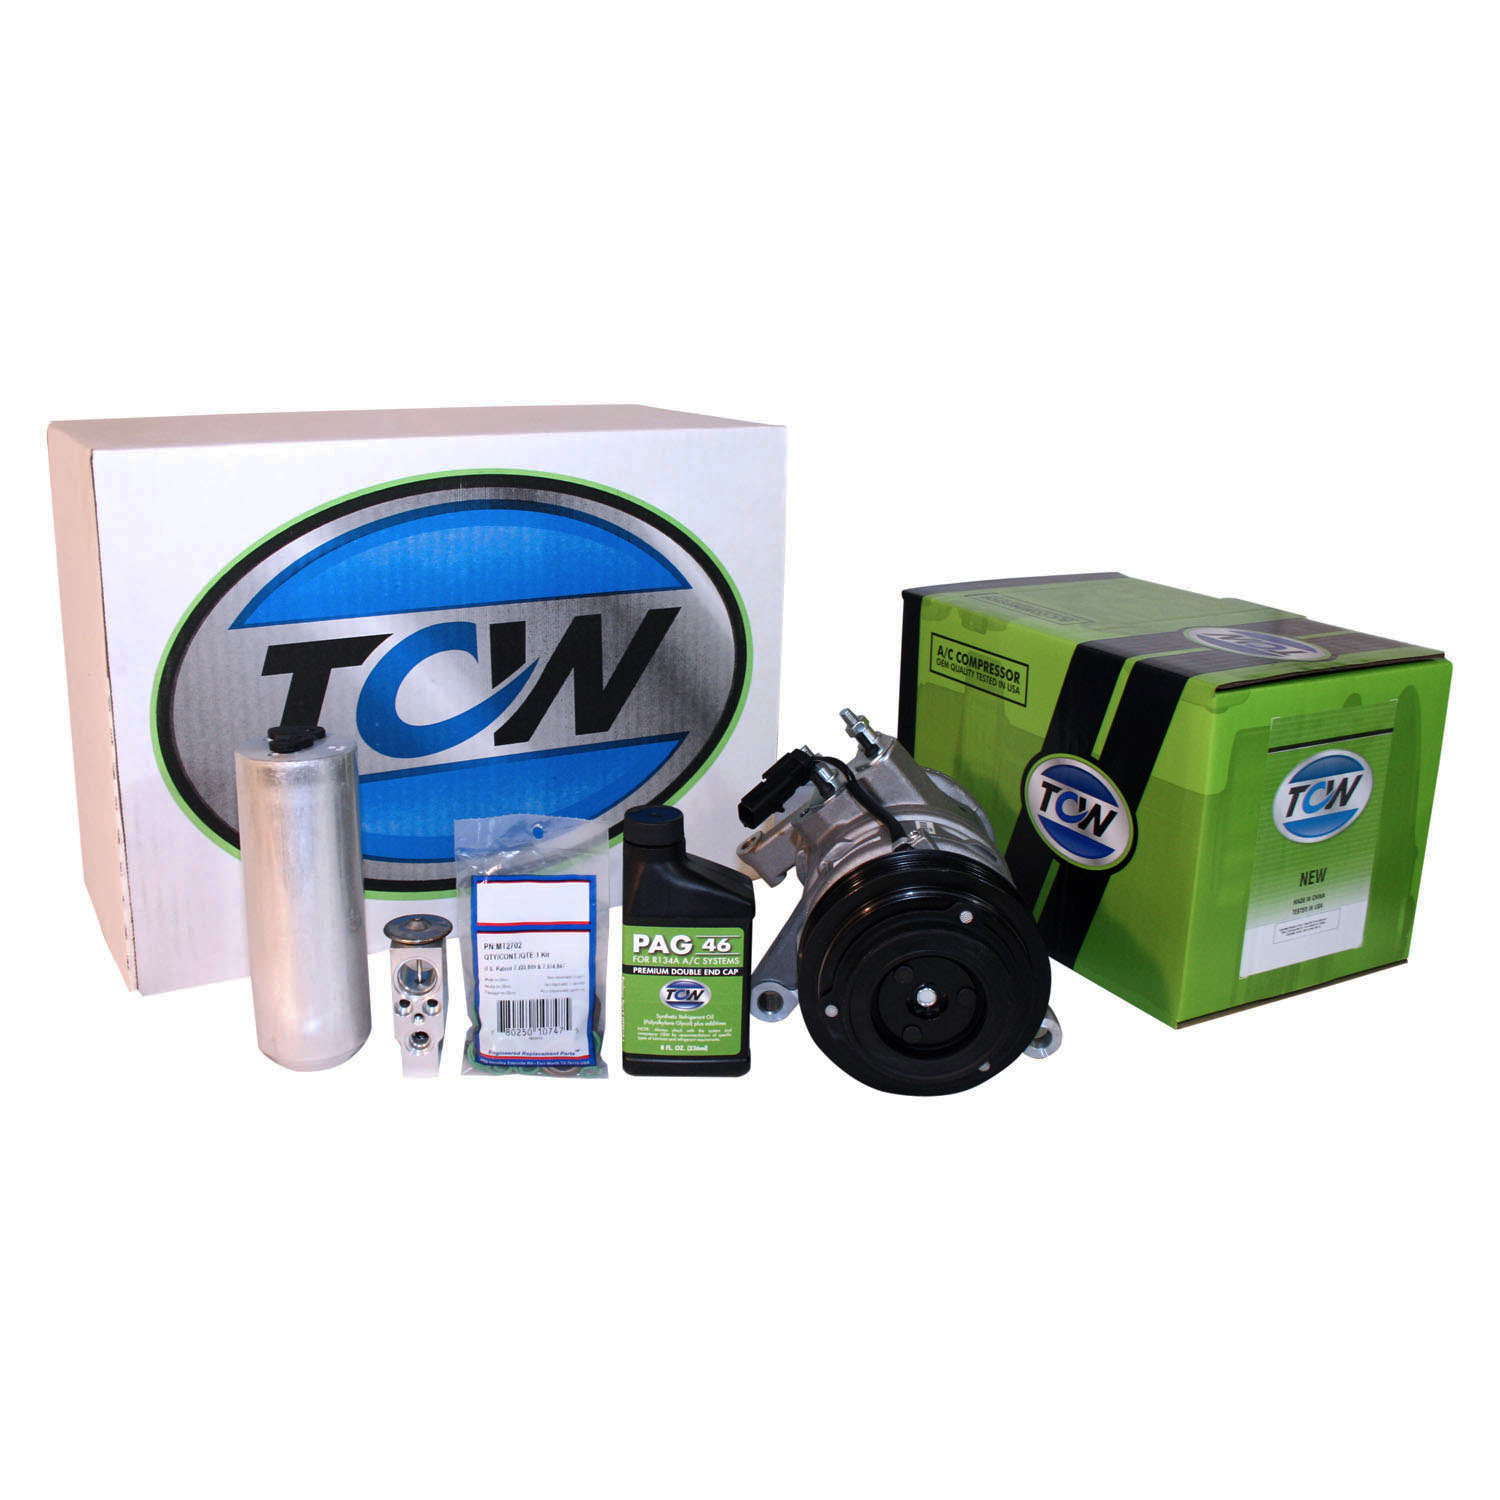 TCW Vehicle A/C Kit K1000191N New Product Image field_60b6a13a6e67c